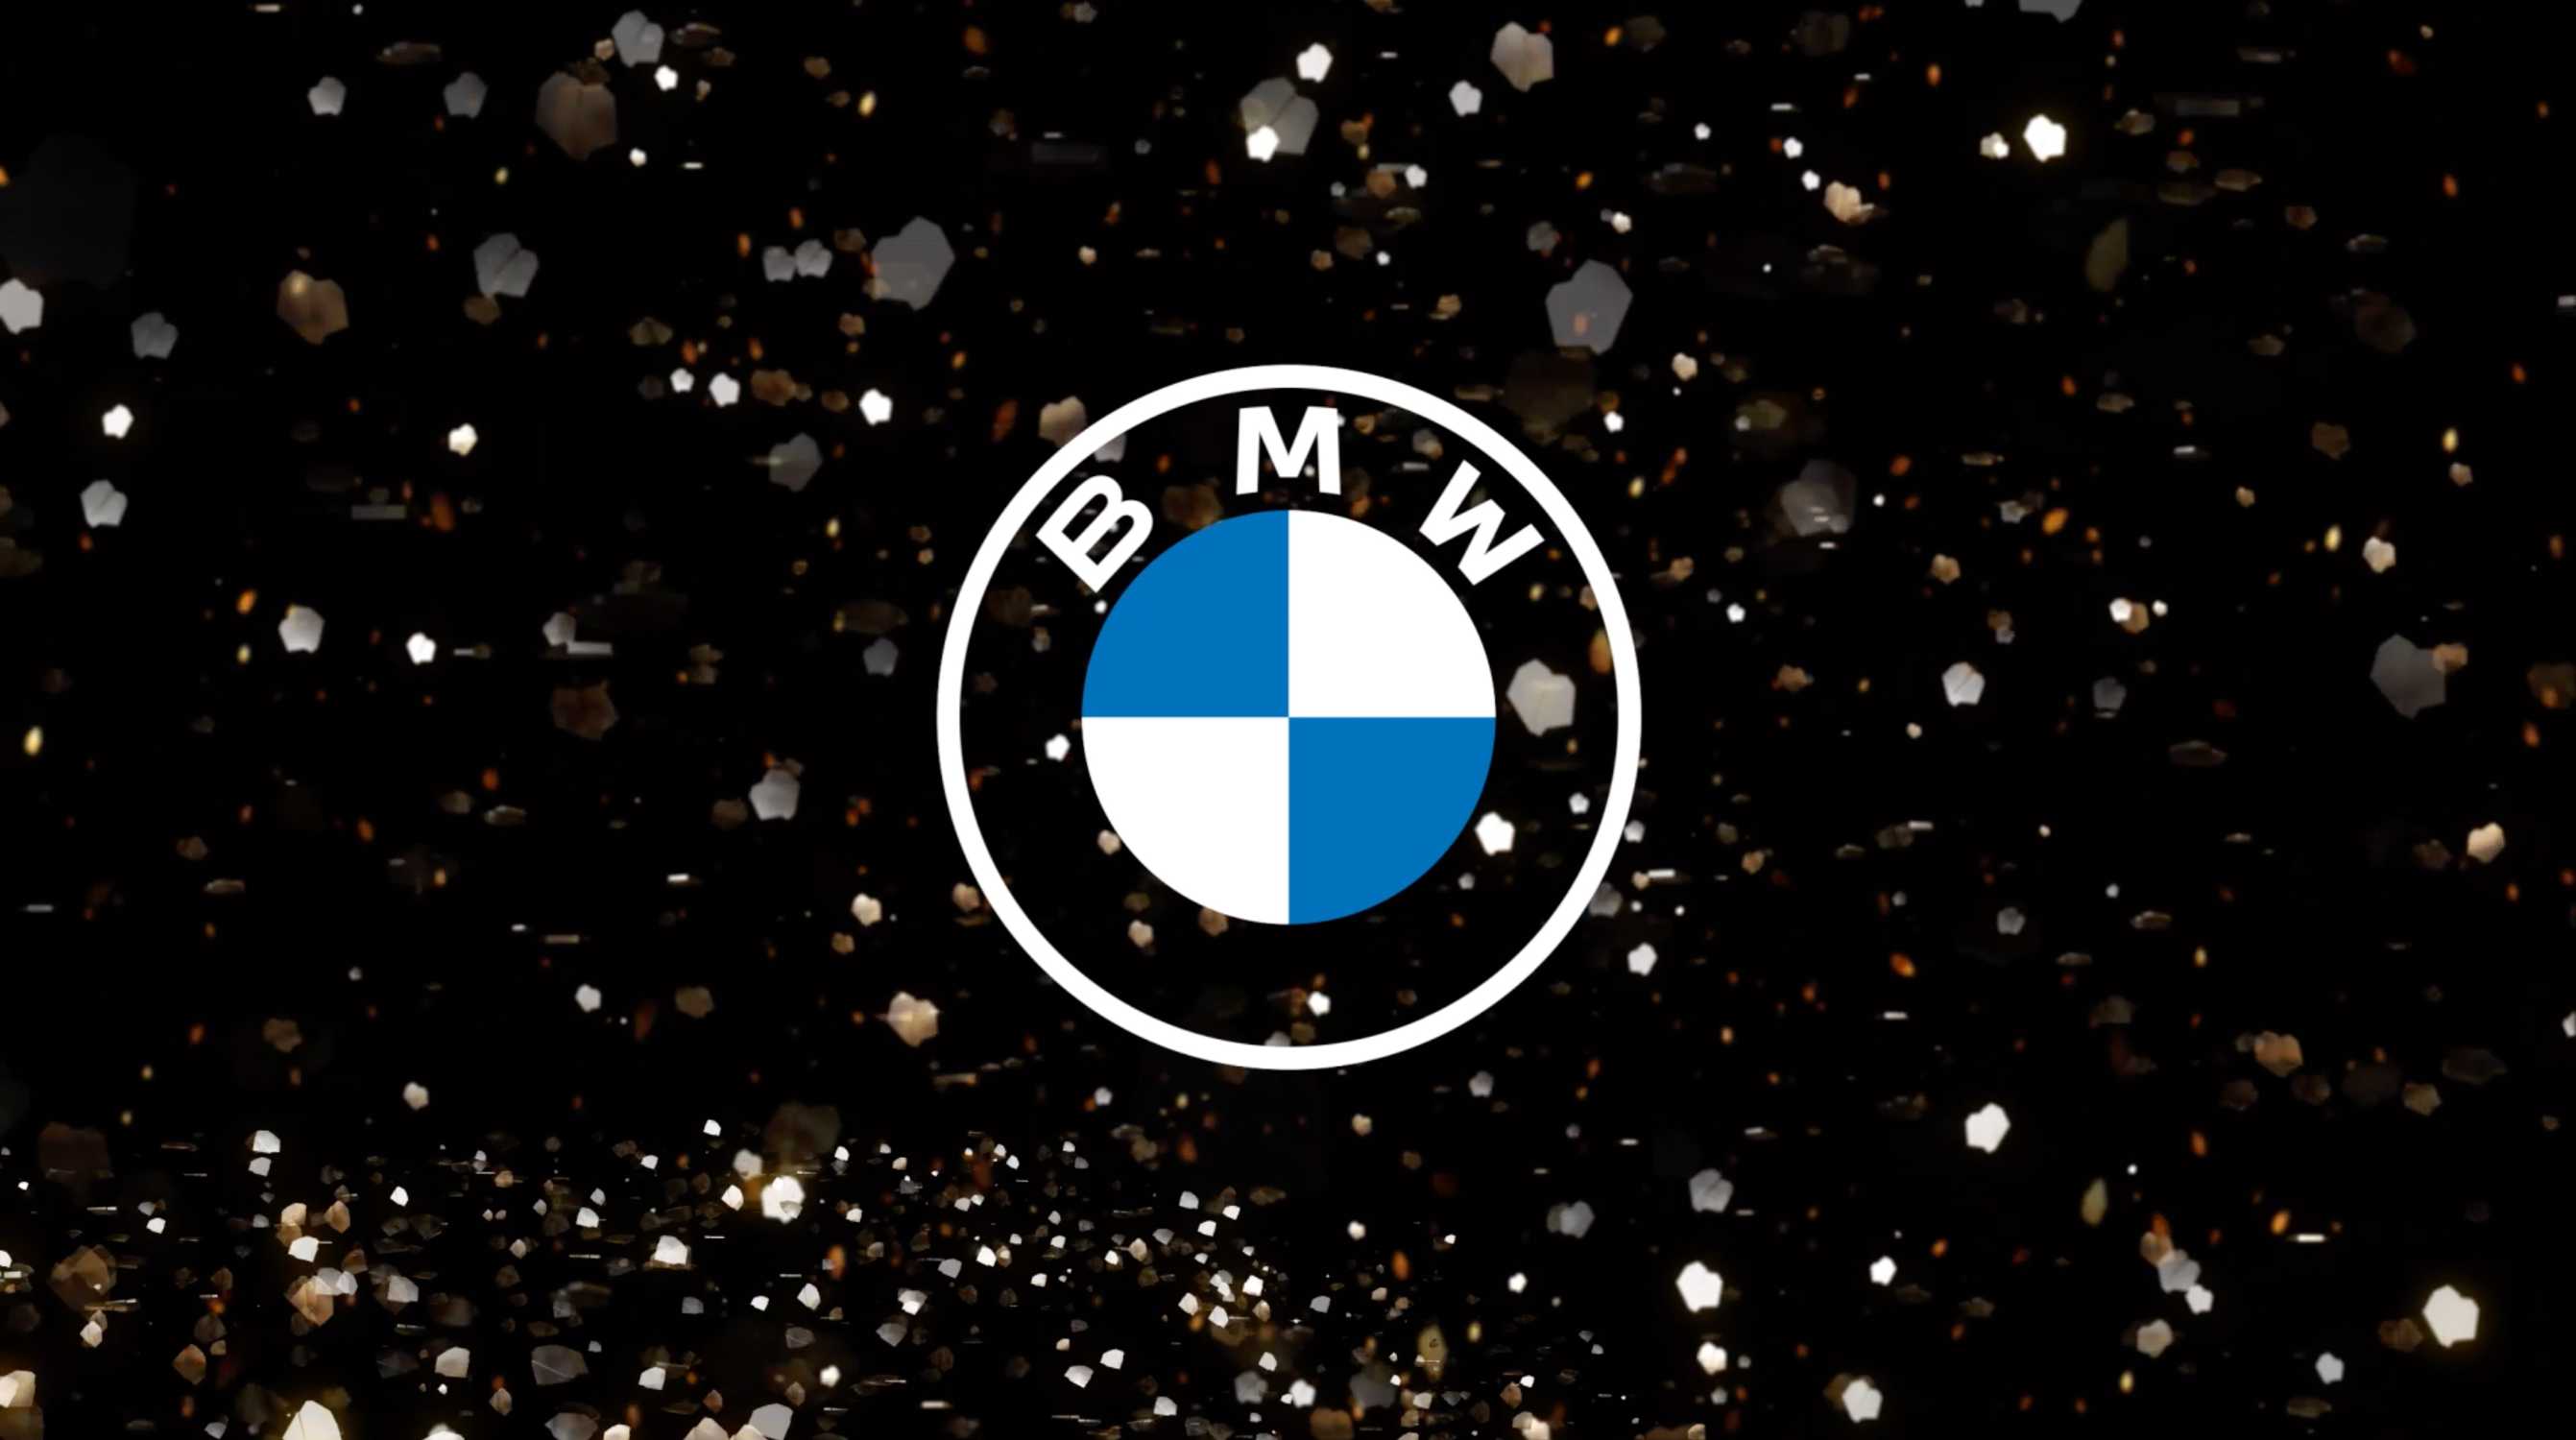 BMW i : Brand Cooperations